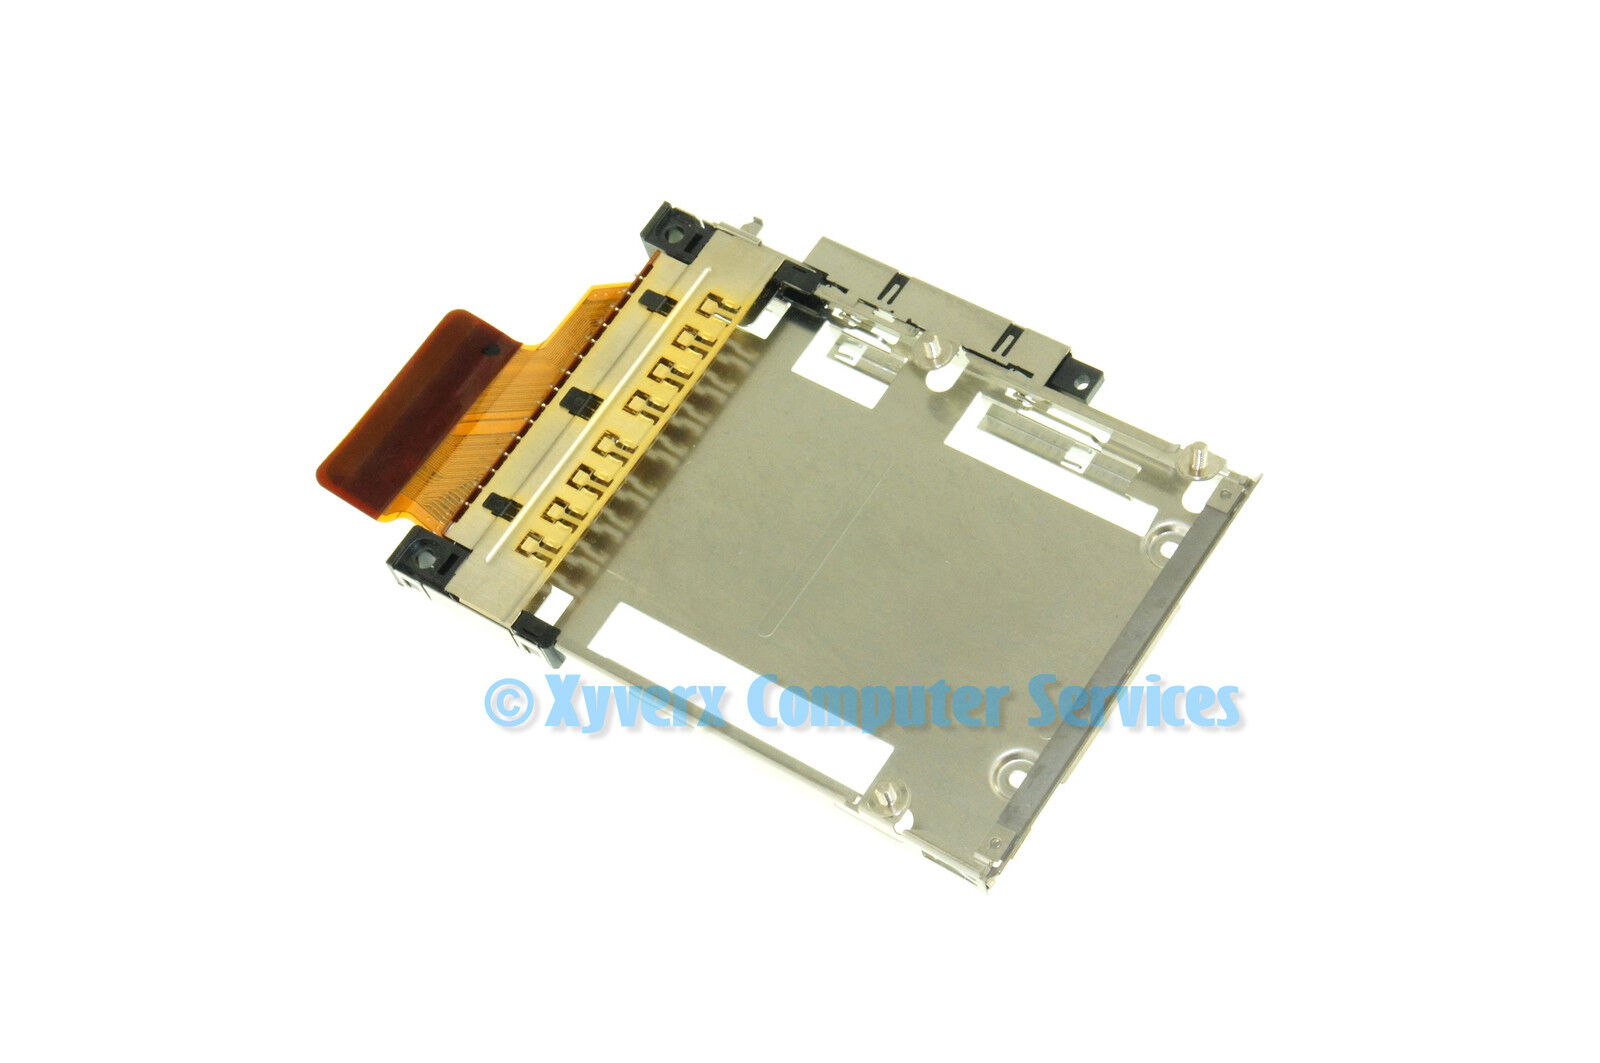 821-0321-A 632-0249-A GENUINE ORIGINAL APPLE PCMCIA CARD A1052 EMC 1983 SERIES